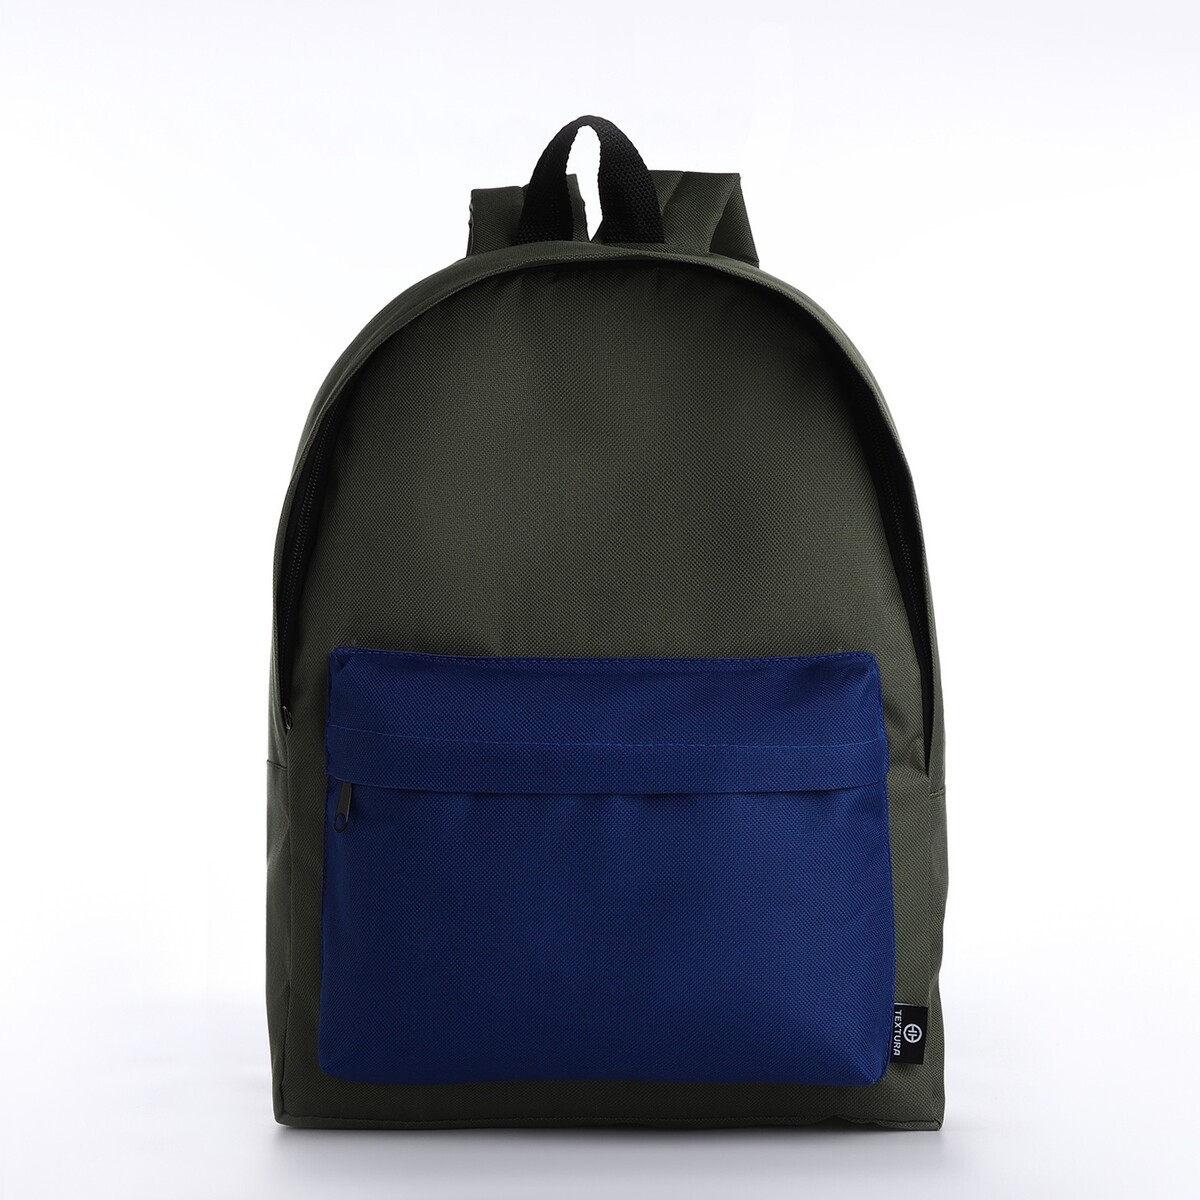 Спортивный рюкзак из текстиля на молнии textura, 20 литров, цвет хаки/синий спортивный рюкзак textura 20 литров хаки